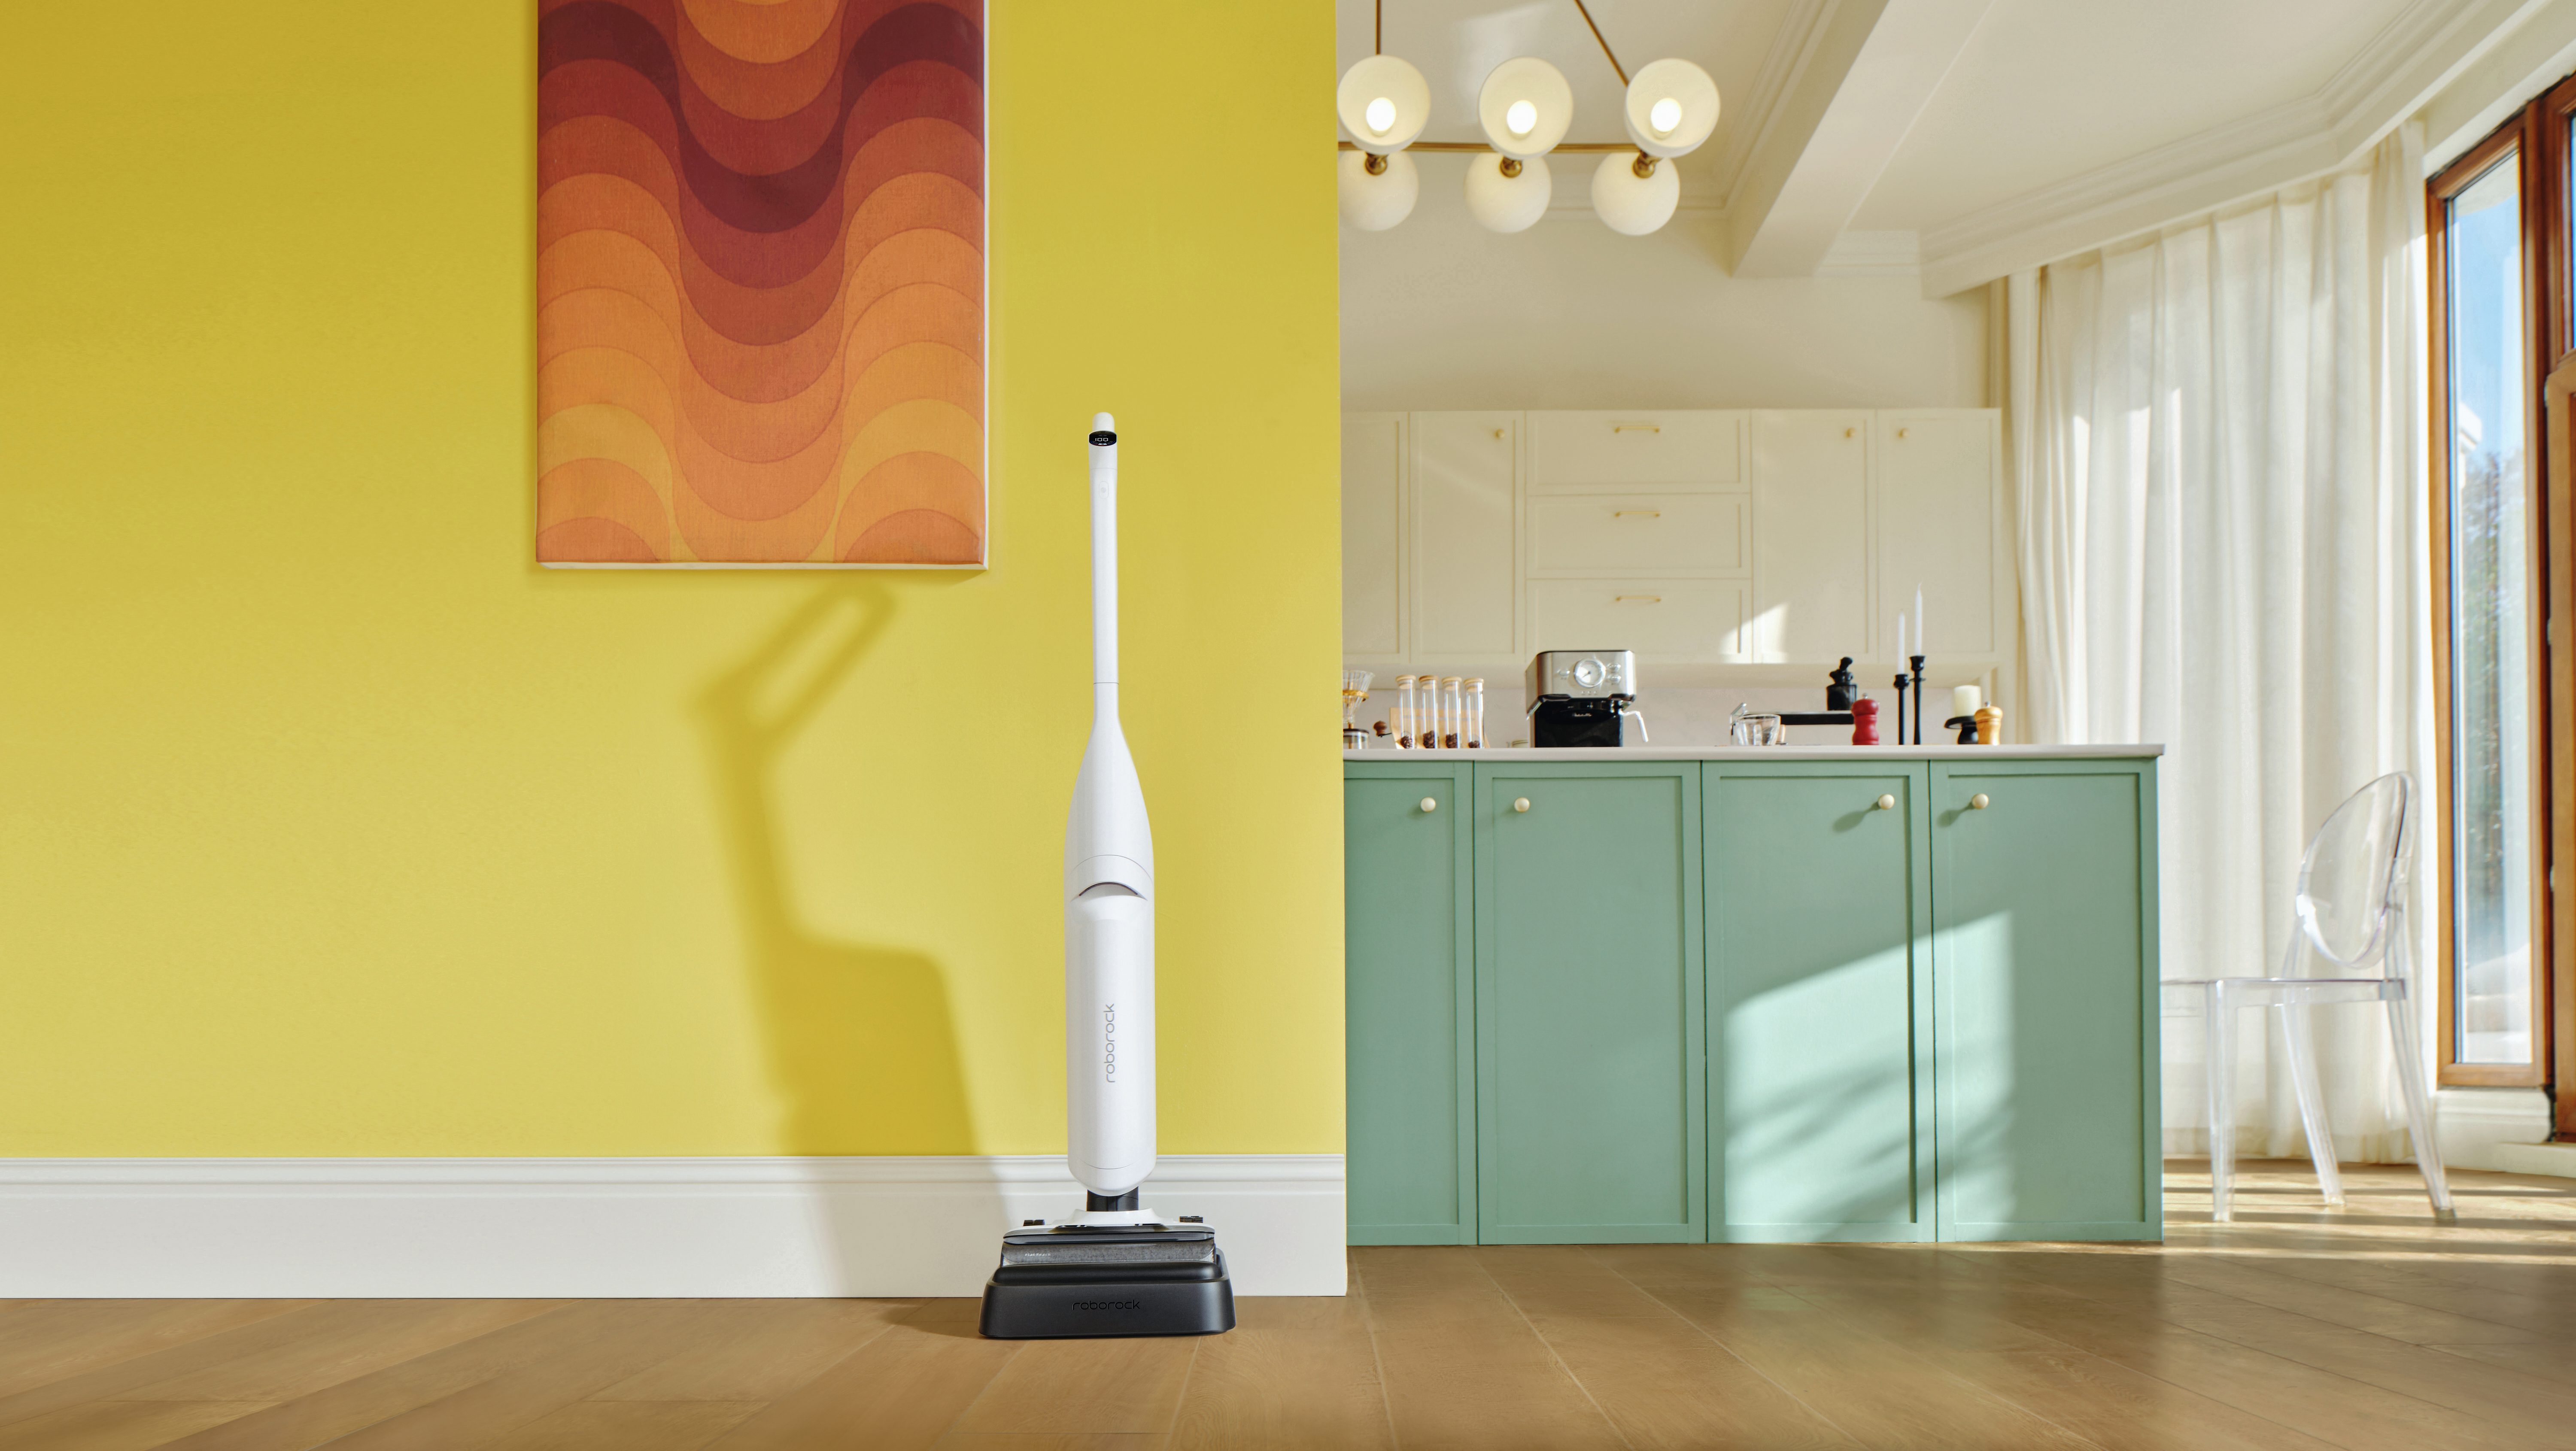 Roborock Flexi Pro Vacuum Is Revolutionizing How to Clean